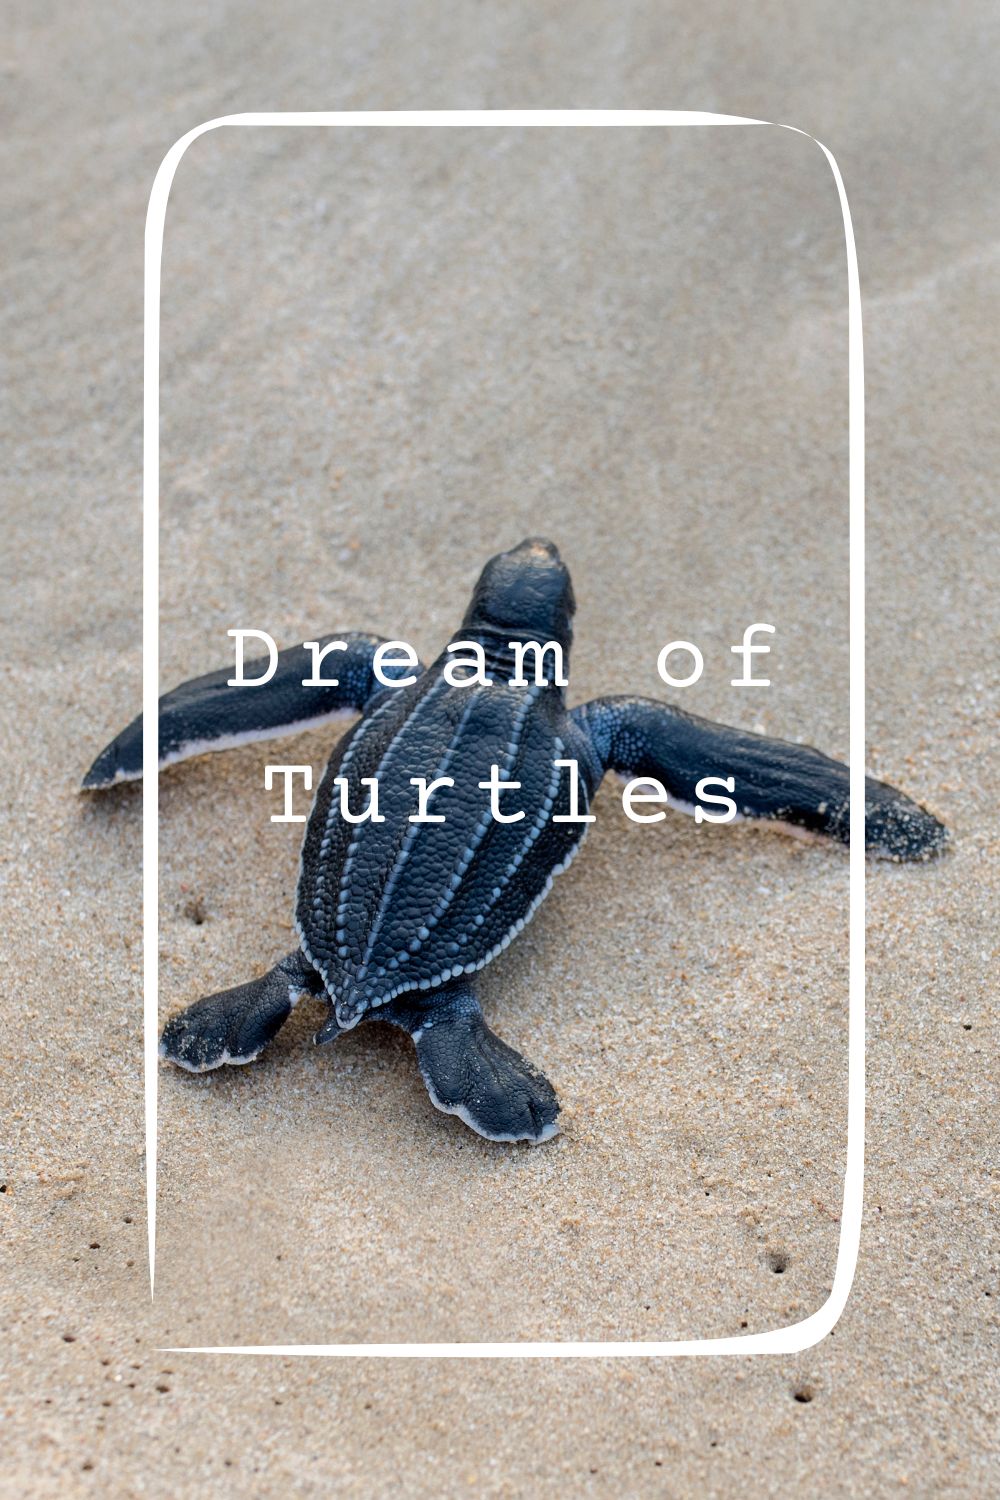 8 Dream of Turtles Meanings4